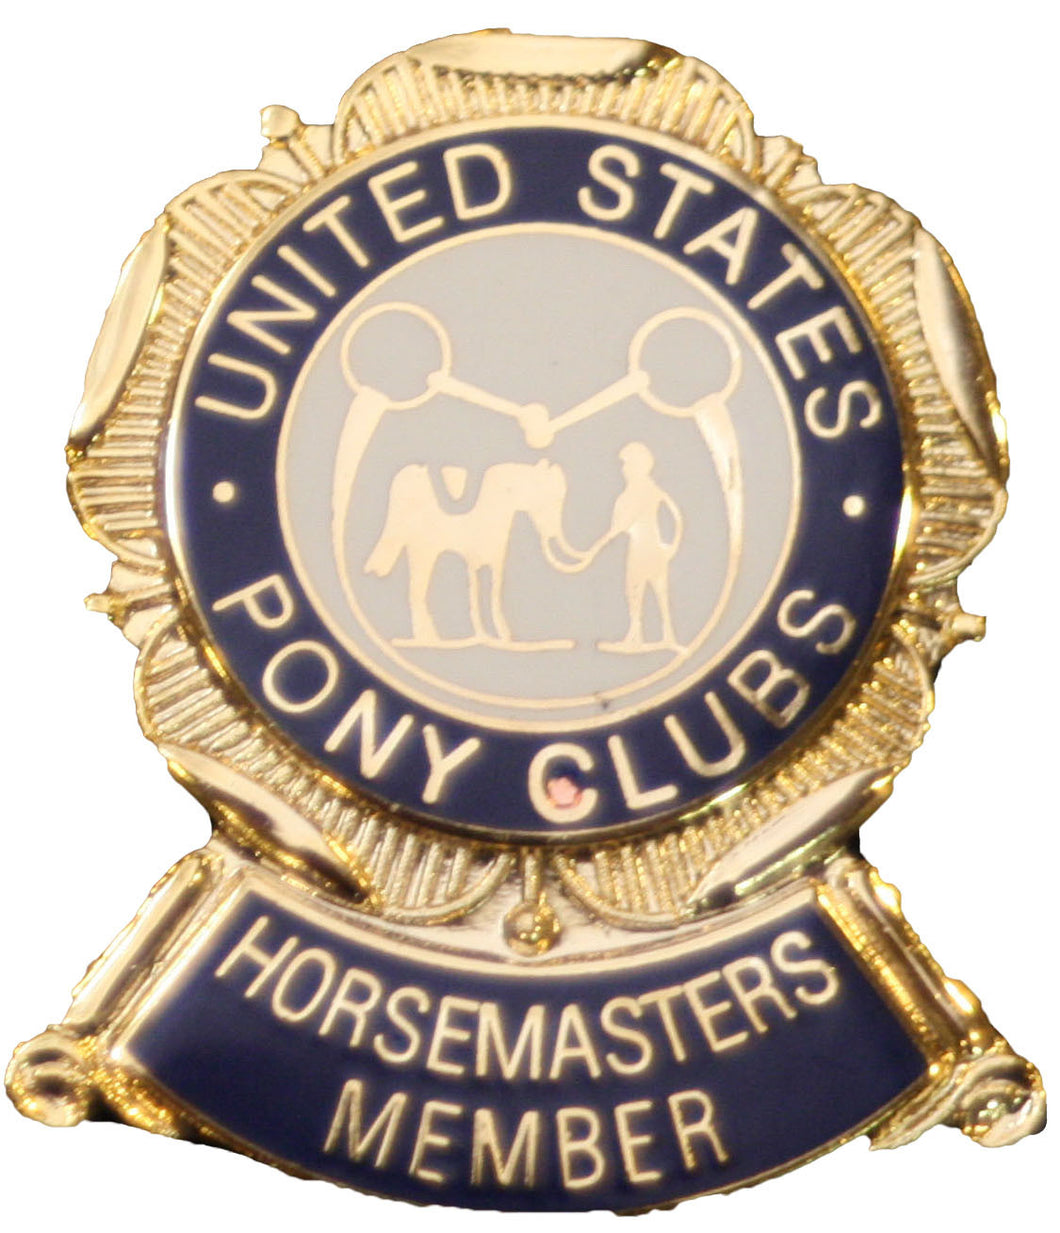 Vintage Pin - Horsemasters Member